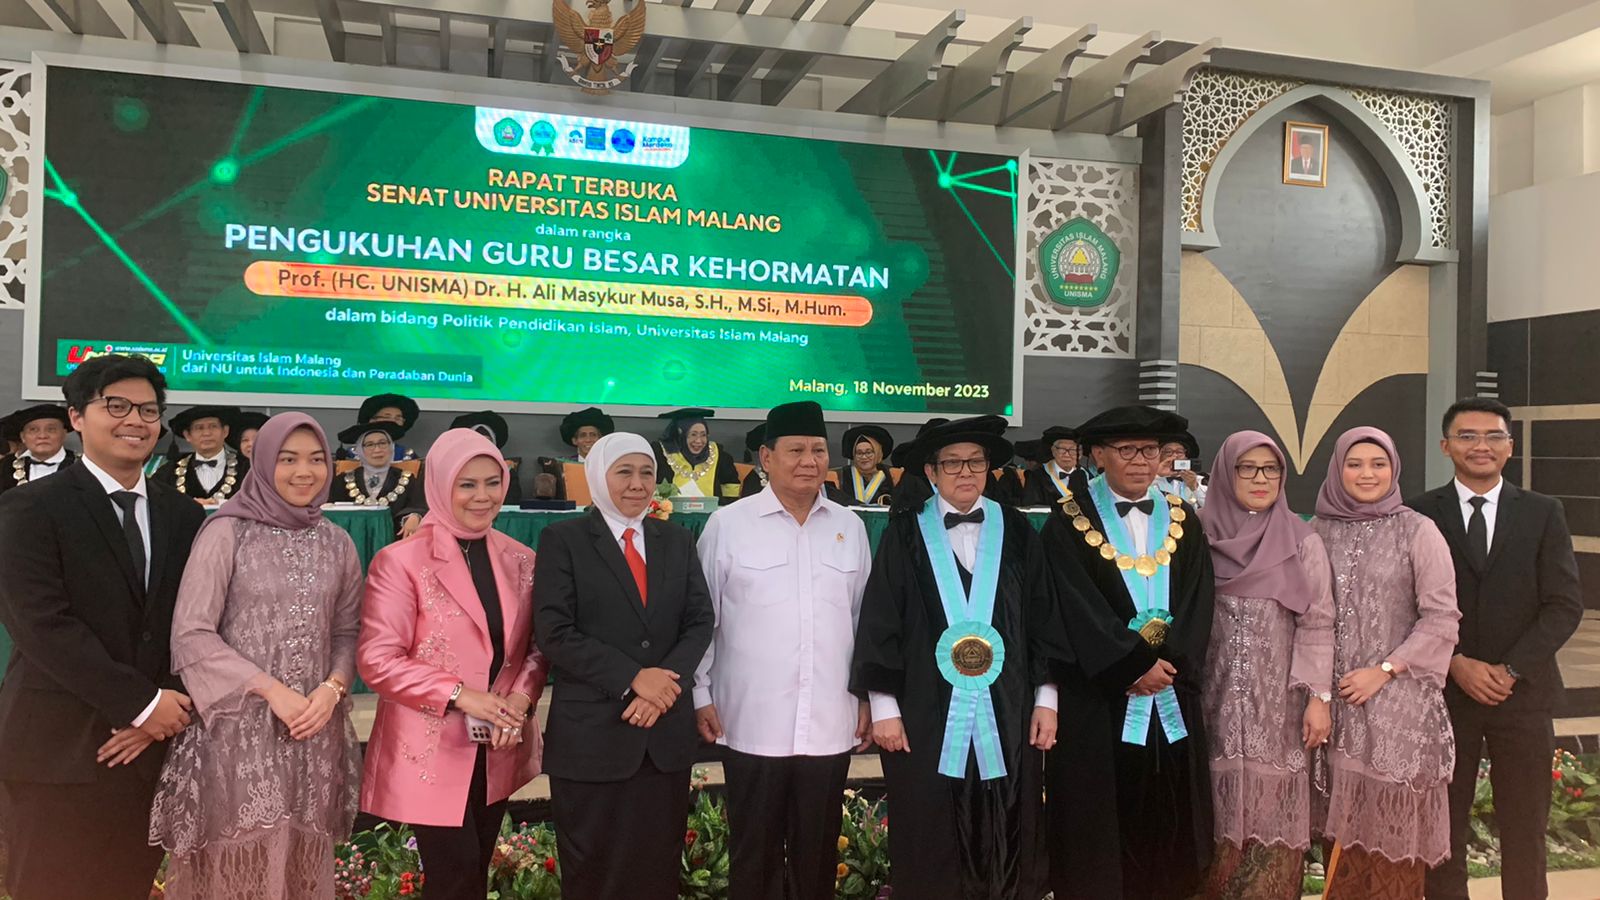 Foto bersama Prof HC Unisma Ali Masykur Musa beraam ajajaran pimpinan Unisma, Menhan RI, Gubernur Jatim serta keluarga.